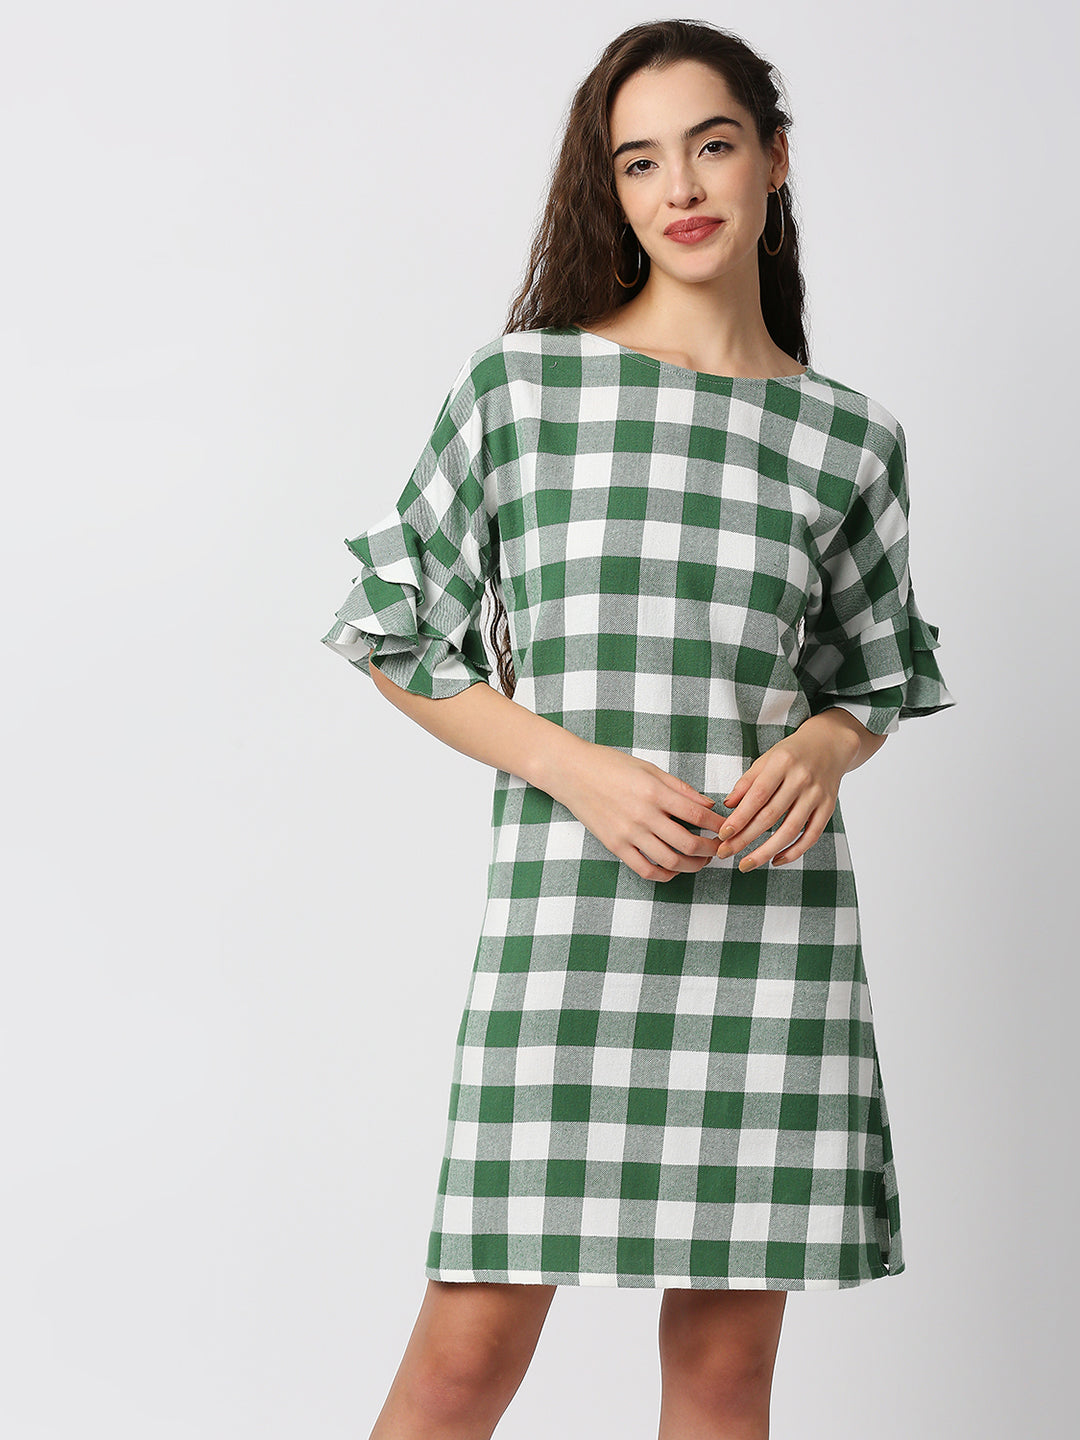 Mantra checkered dress